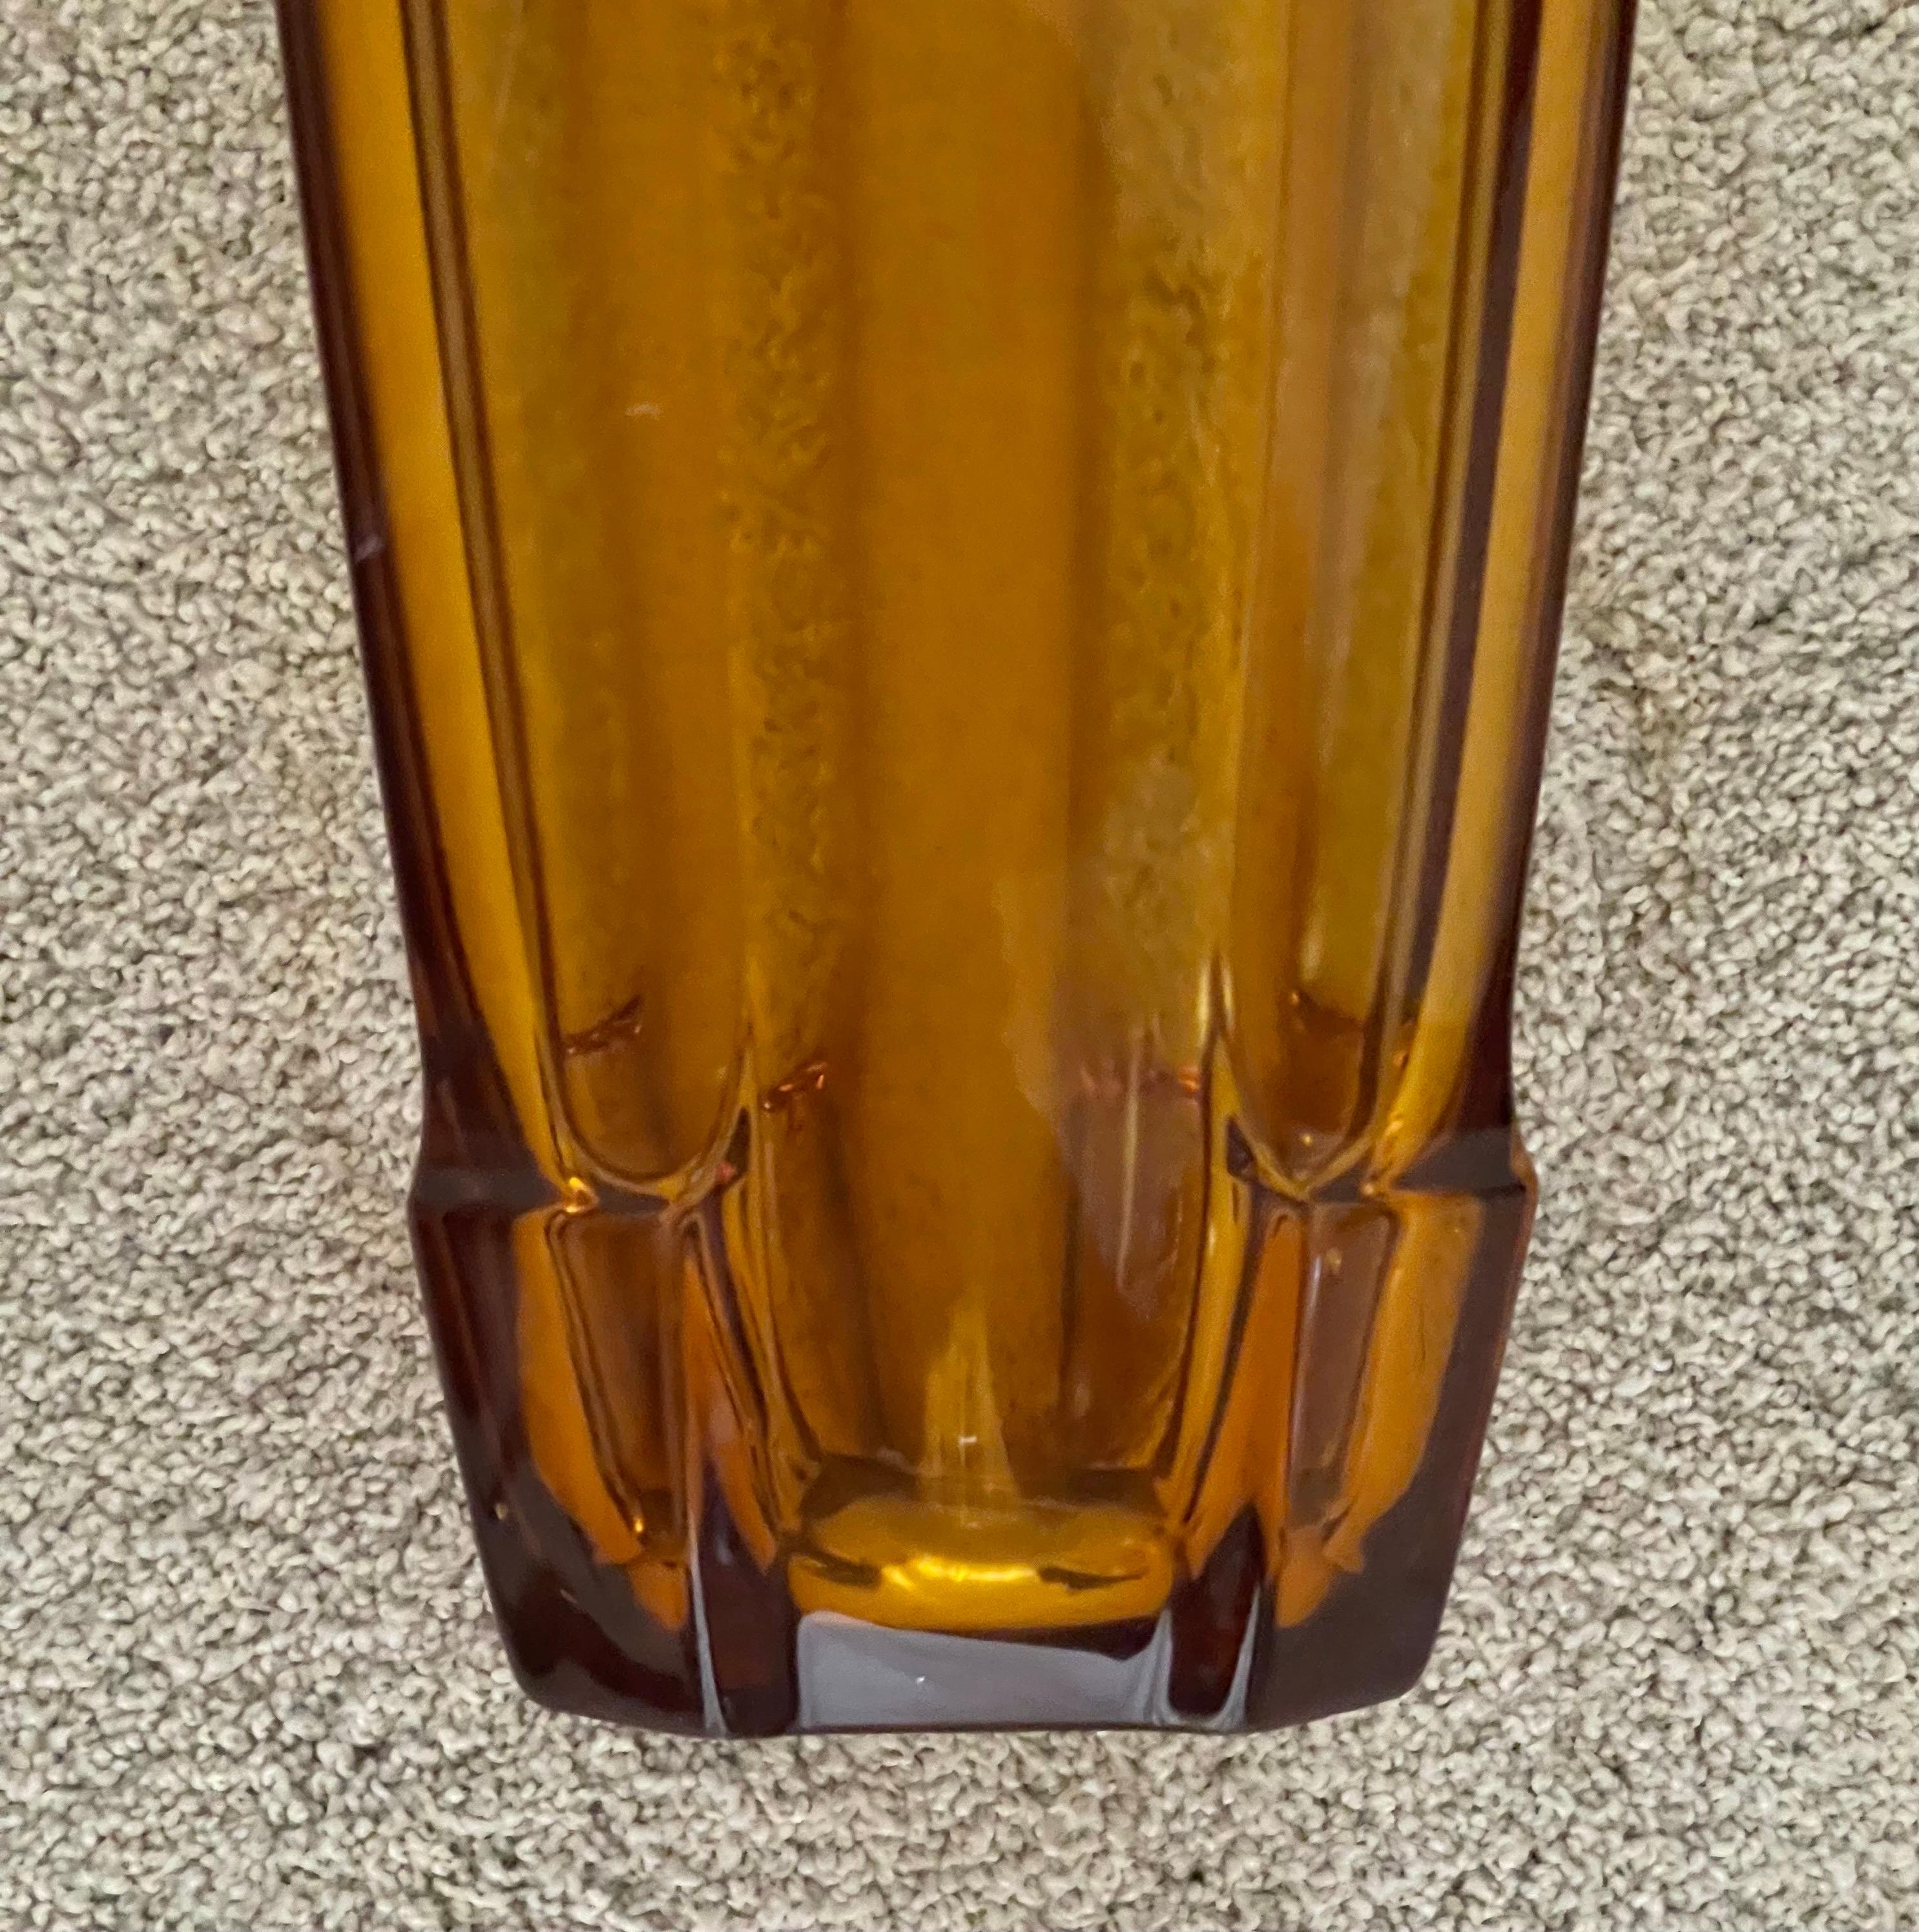 Large Art Deco Art Glass Faceted Vase by Josef Hoffmann for Moser Glassworks For Sale 2